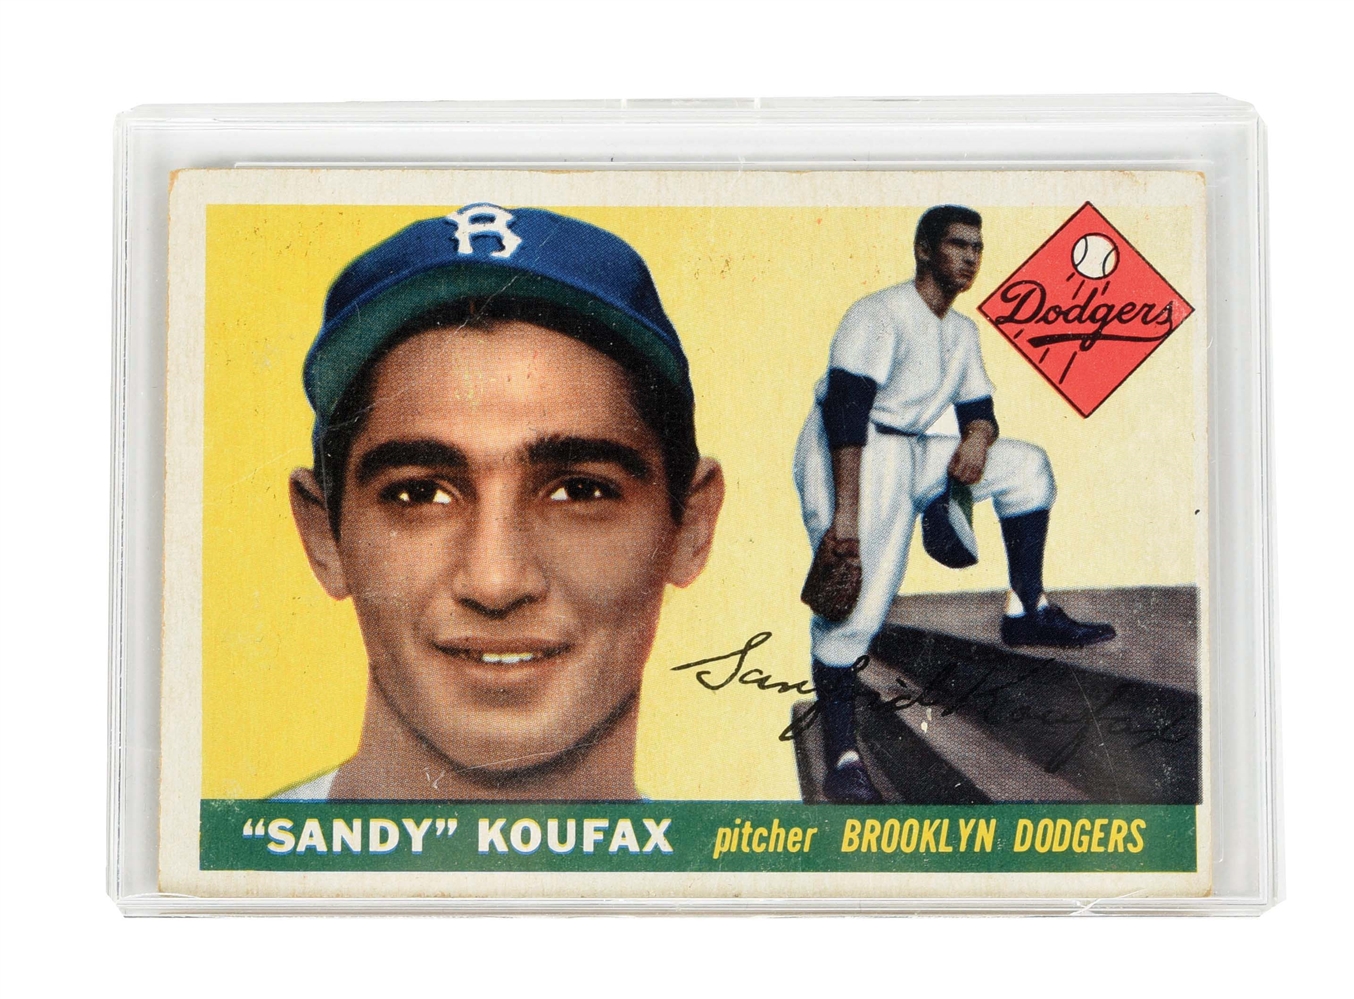 1955 "SANDY" KOUFAX ROOKIE BASEBALL CARD.